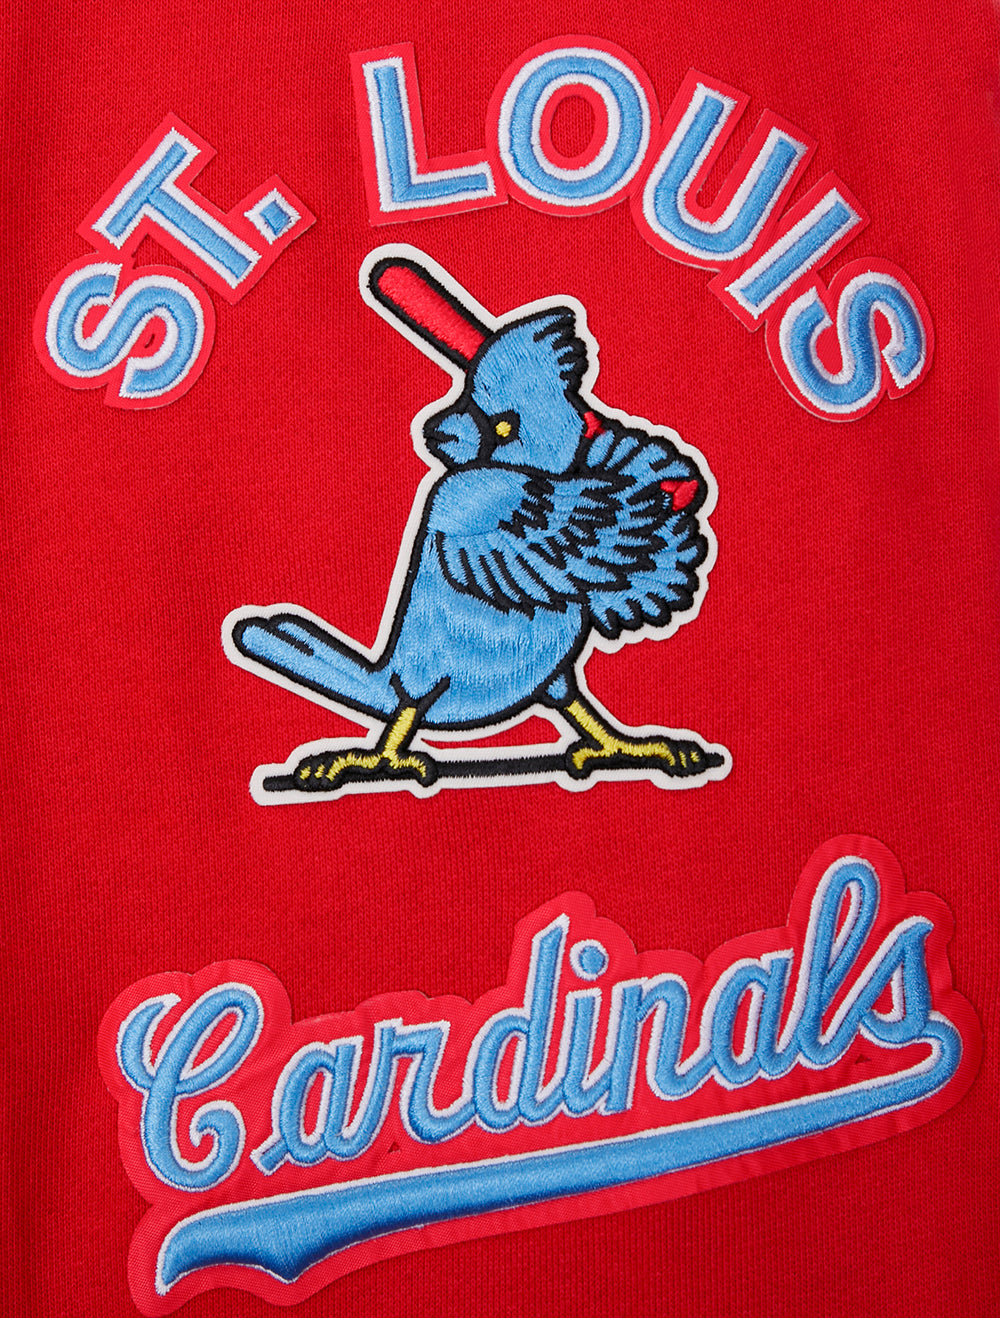 louis cardinals baseball shirts